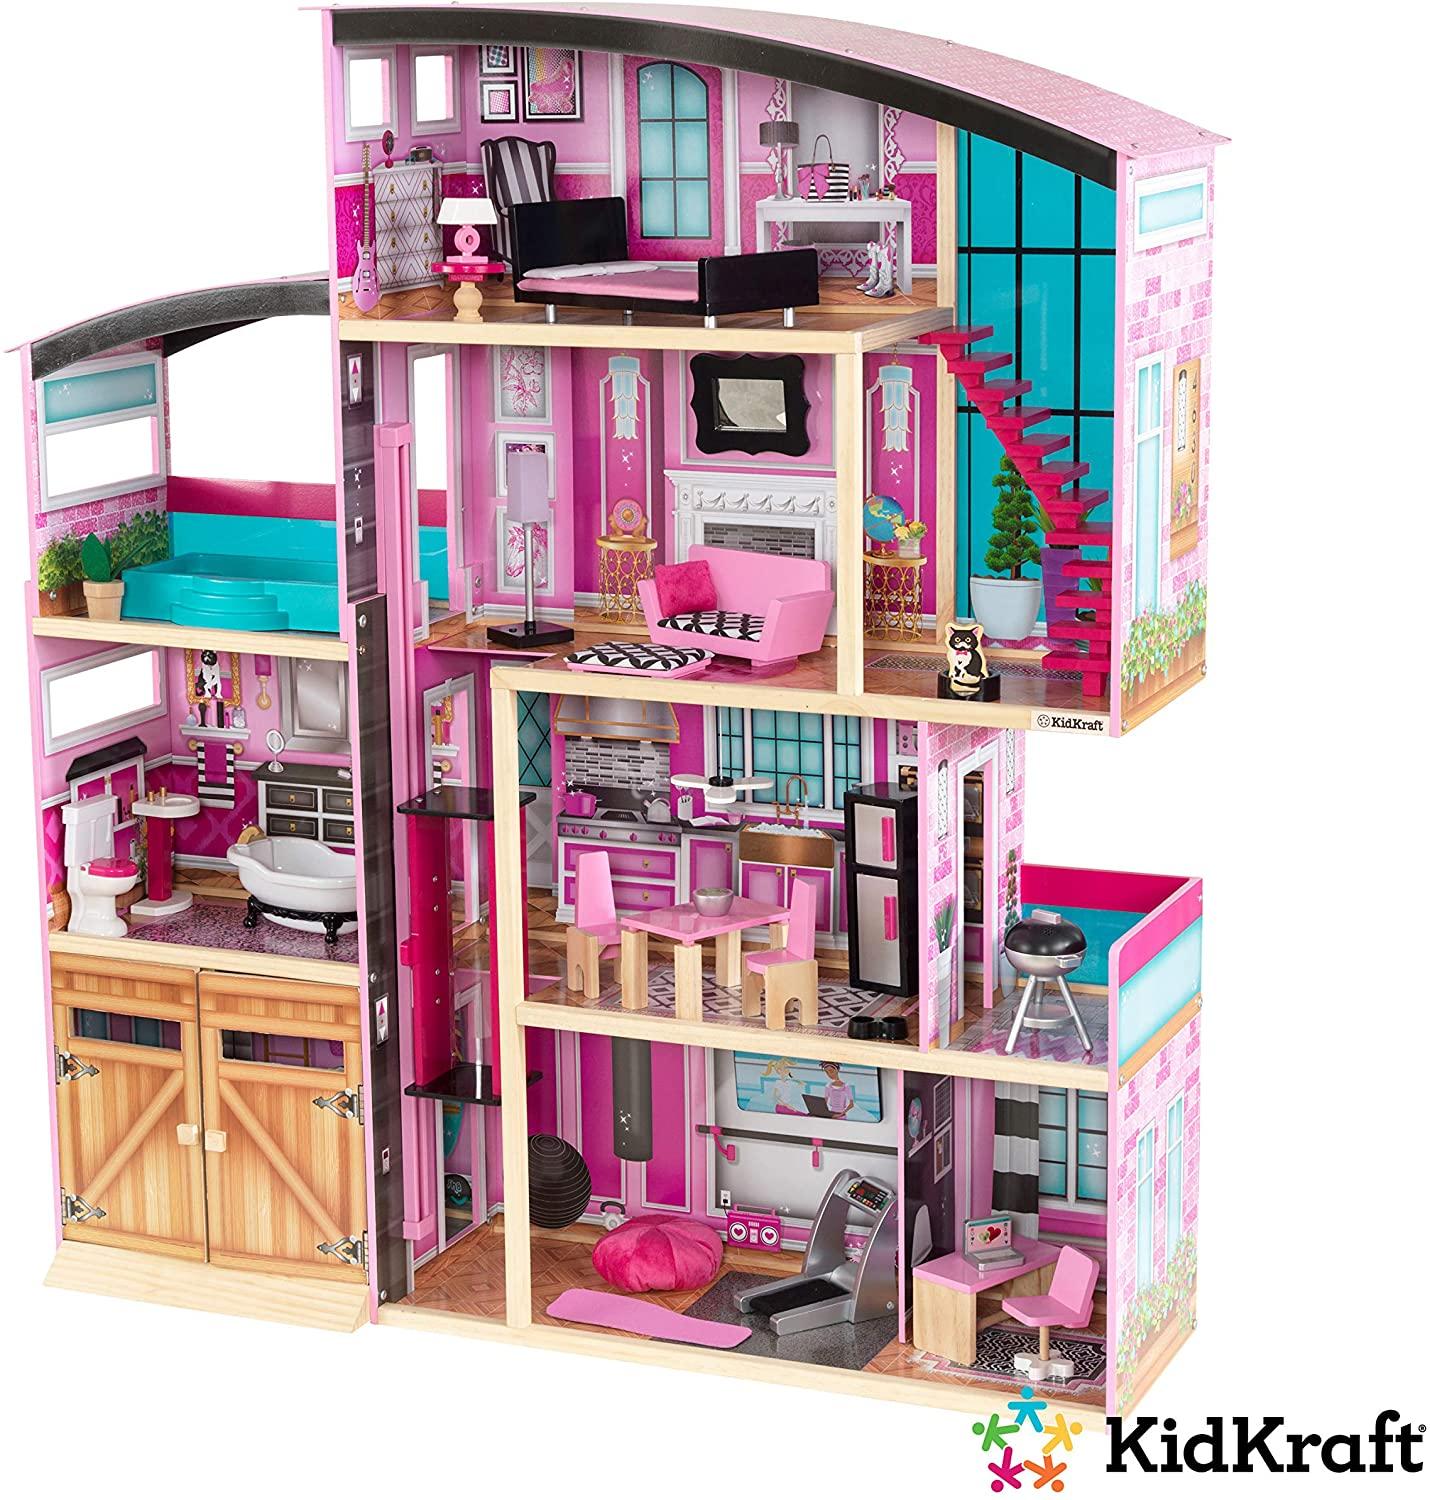 Shimmer mansion dollhouse